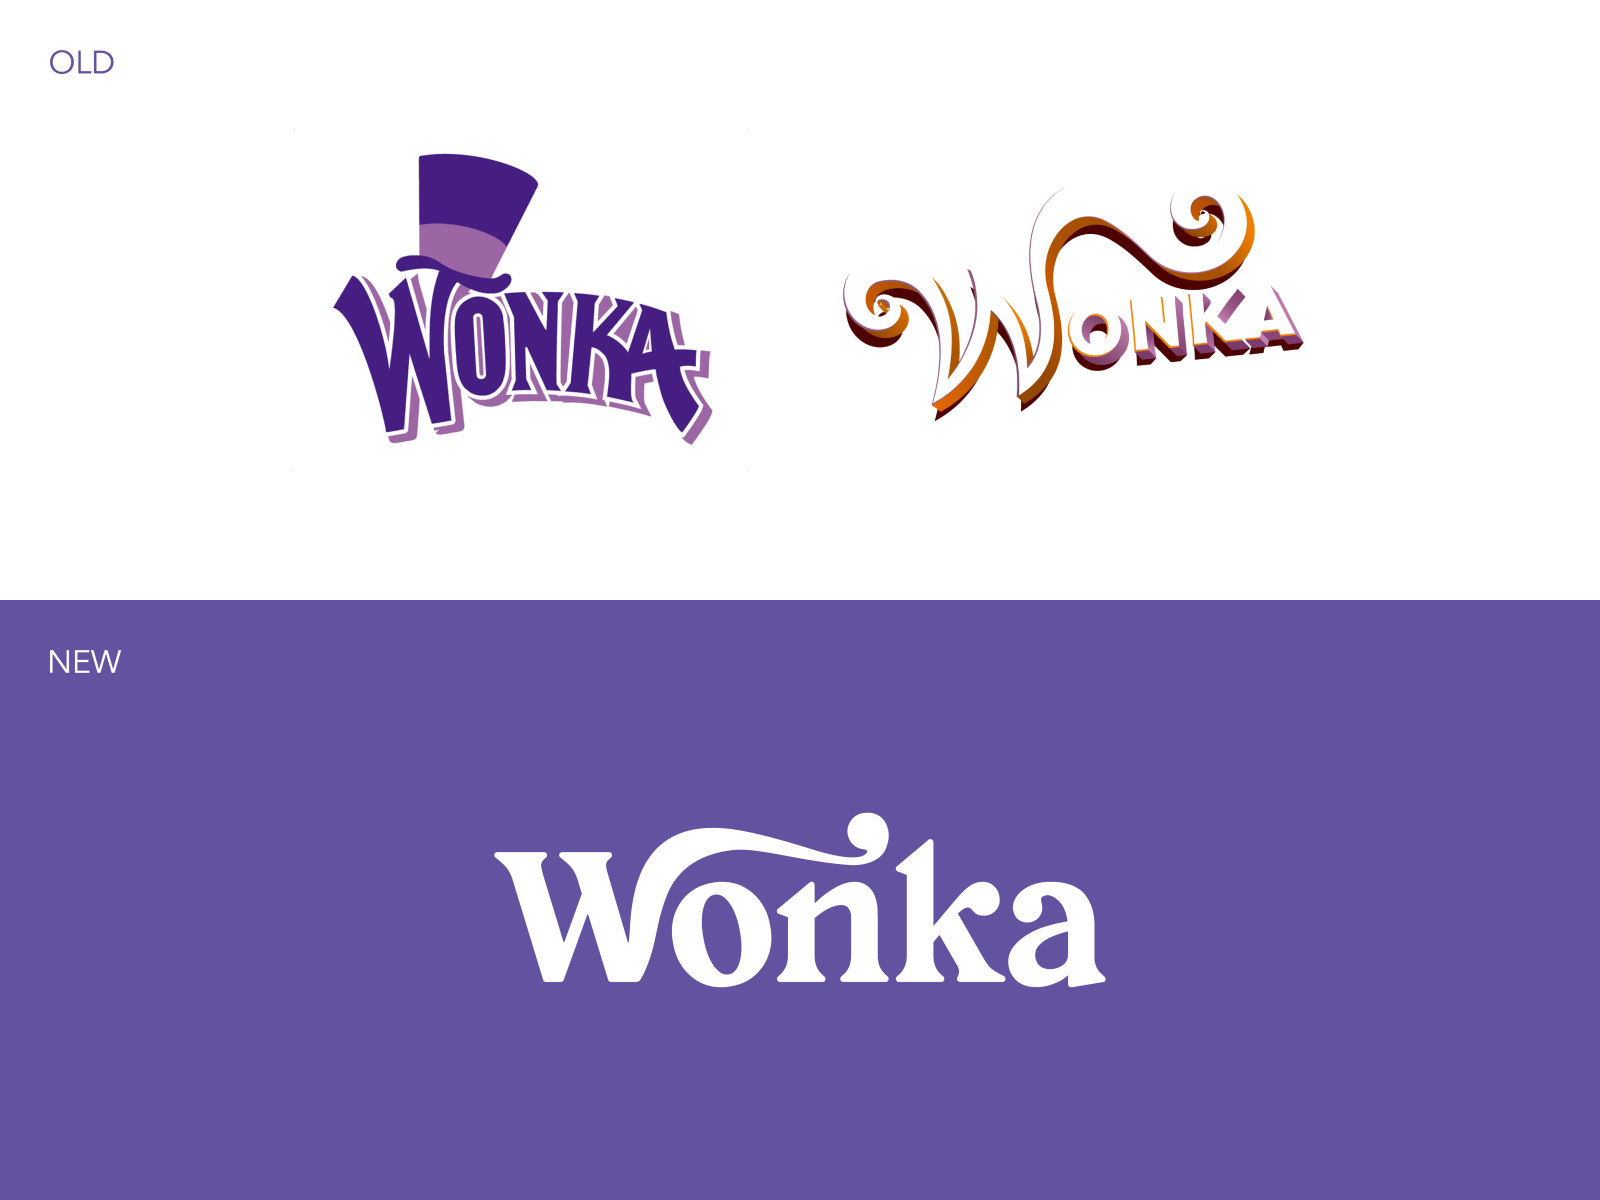 Wonka Logo Redesign by Daniele Maniezzo on Dribbble